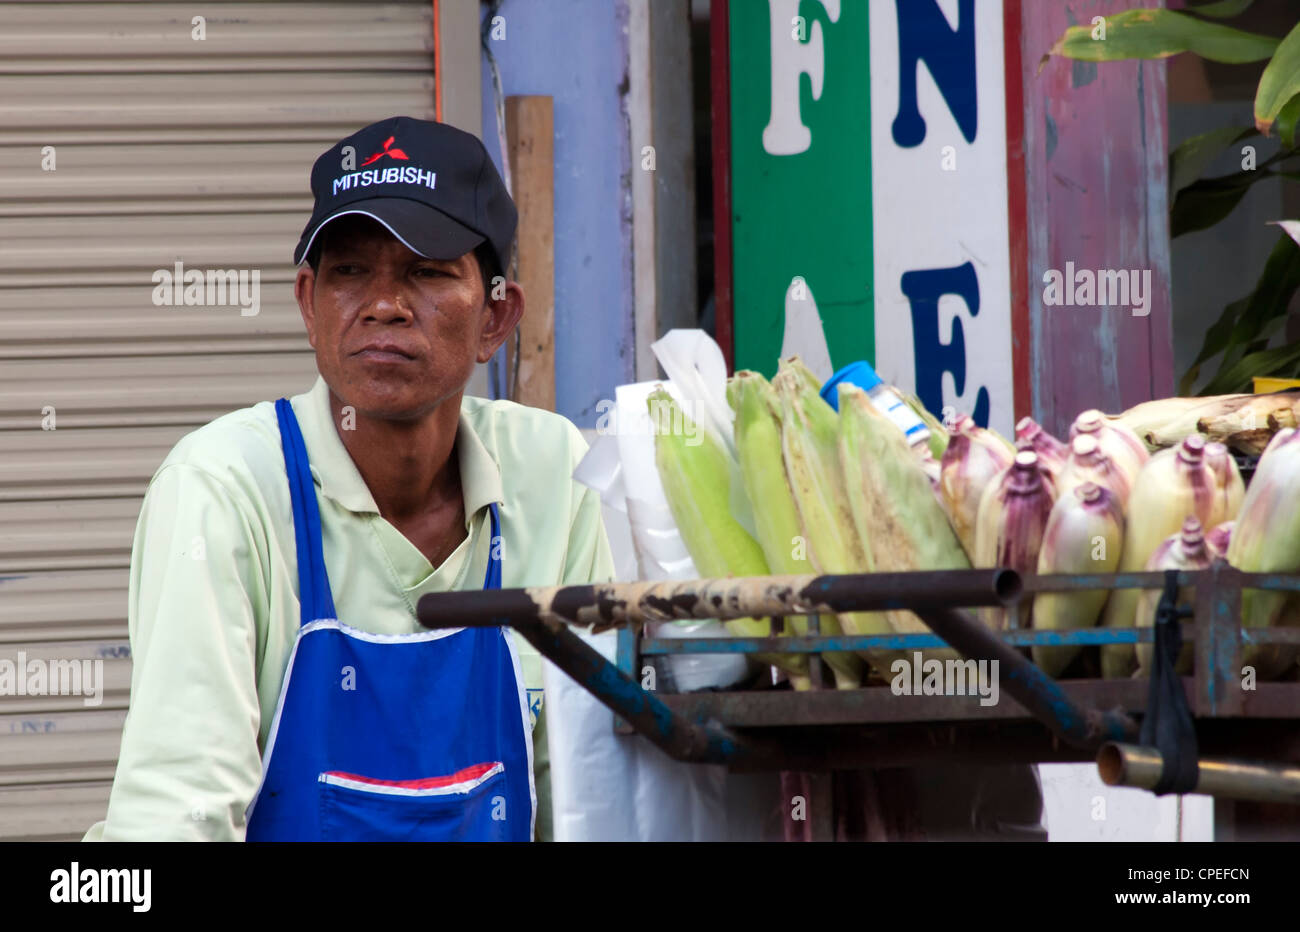 Street food vendor selling sweetcorn, Bangkok, Thailand Stock Photo